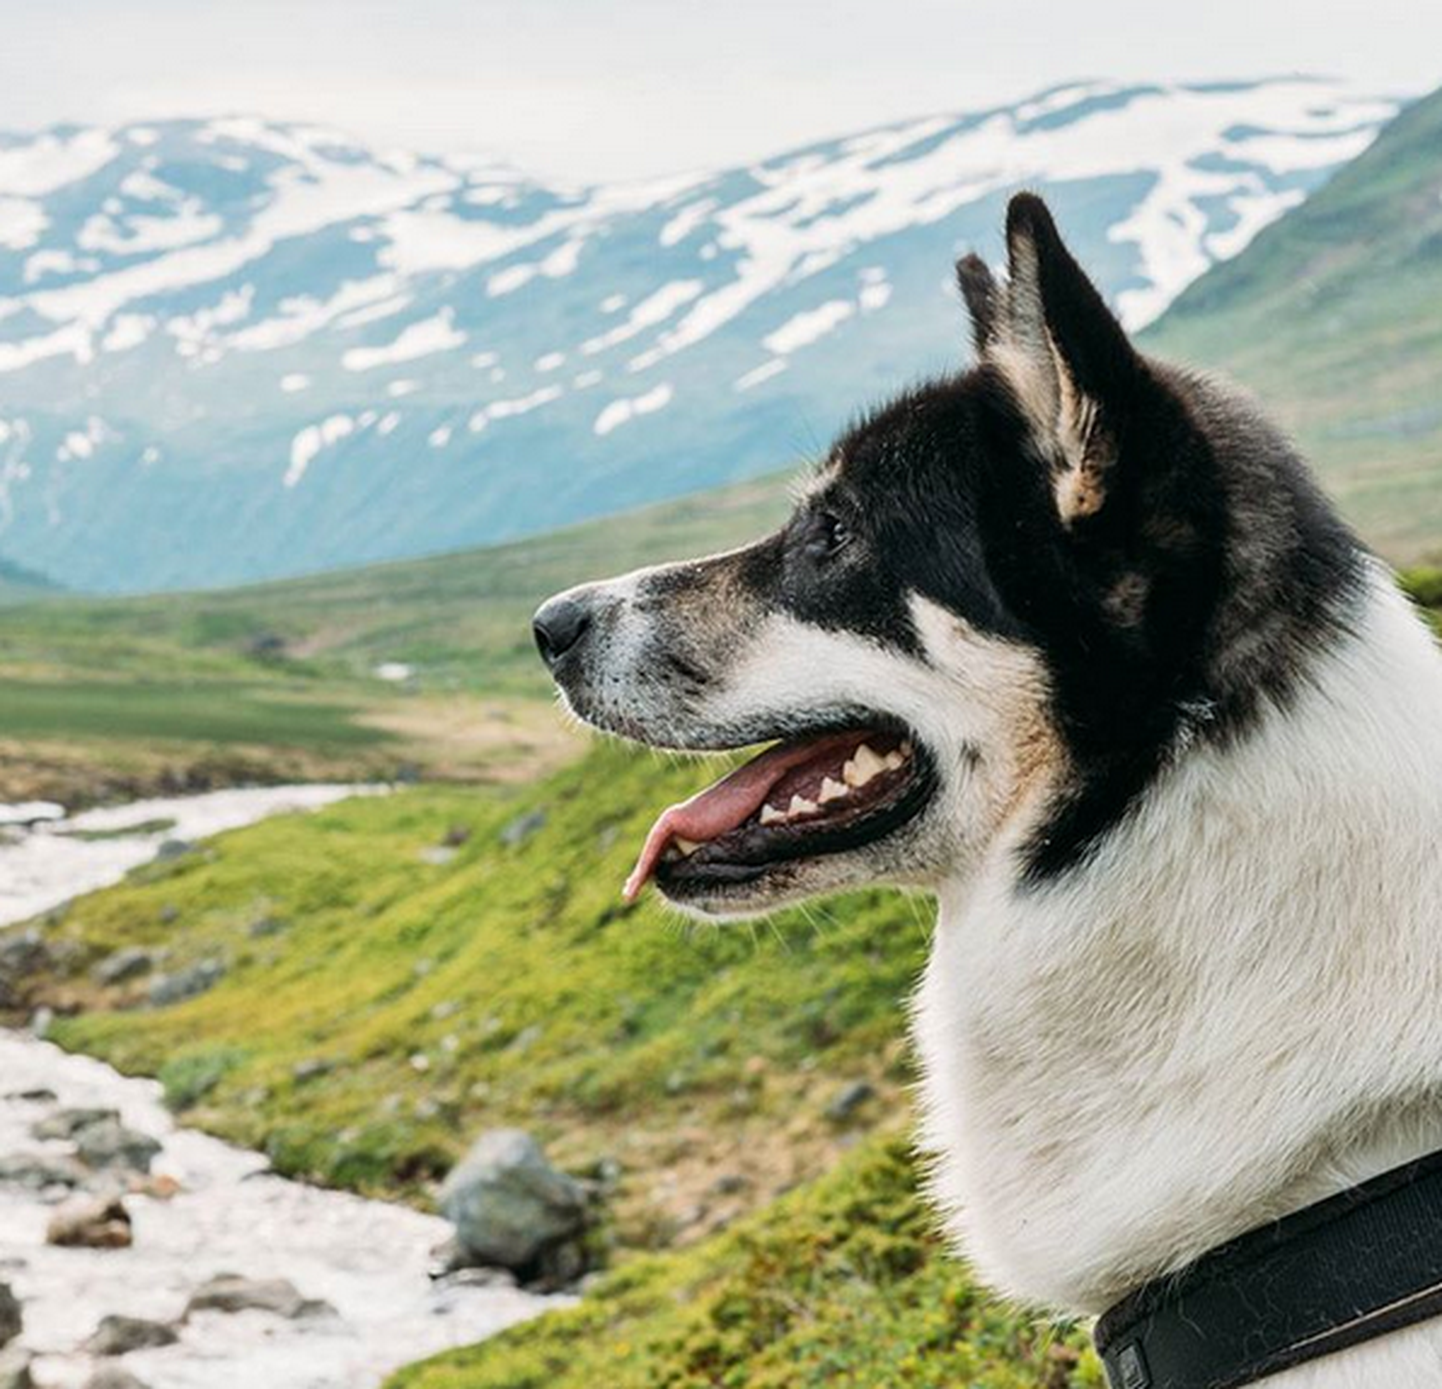 Koer norraka Instagrami-kontolt.